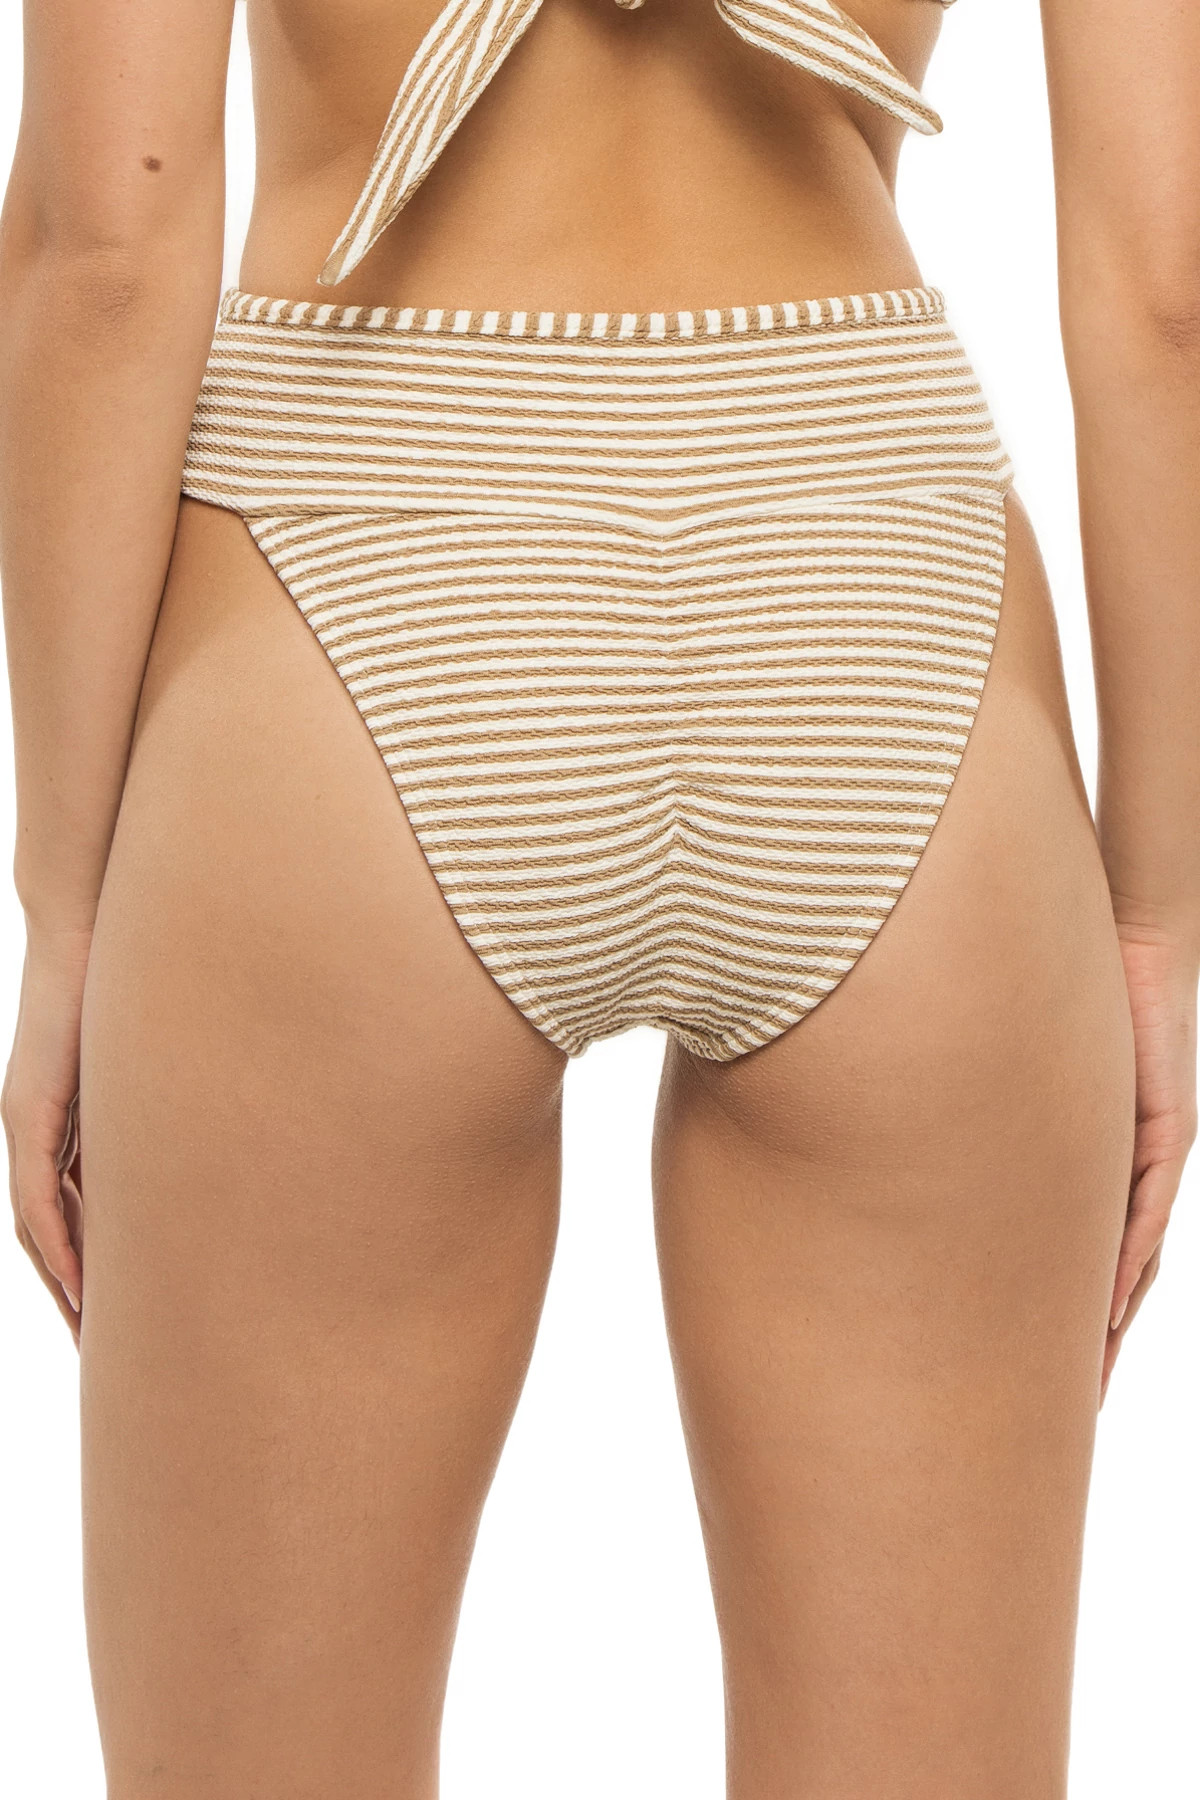 NEUTRAL STRIPE Tamarindo High Waist Bikini Bottom image number 2